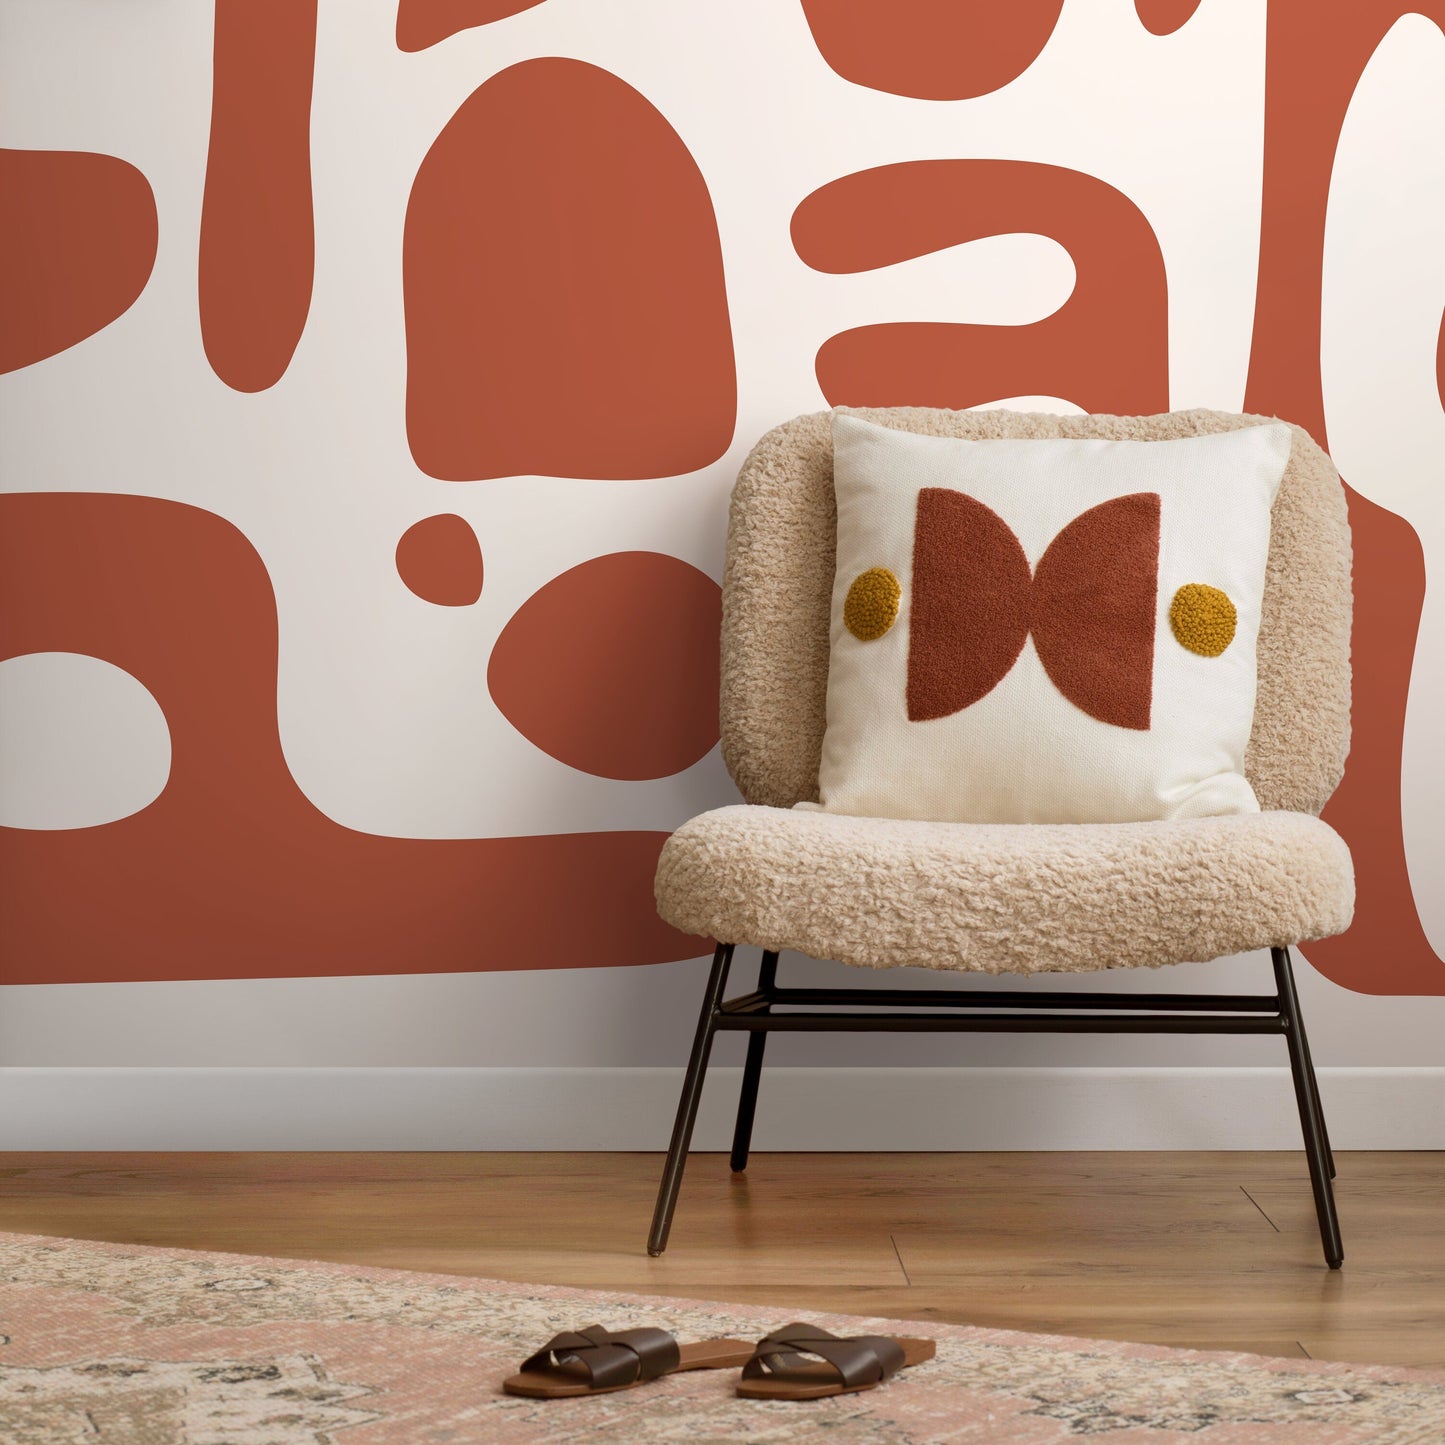 Orange Abstract Art Mural Modern Wallpaper Peel and Stick Wallpaper Home Decor - D595